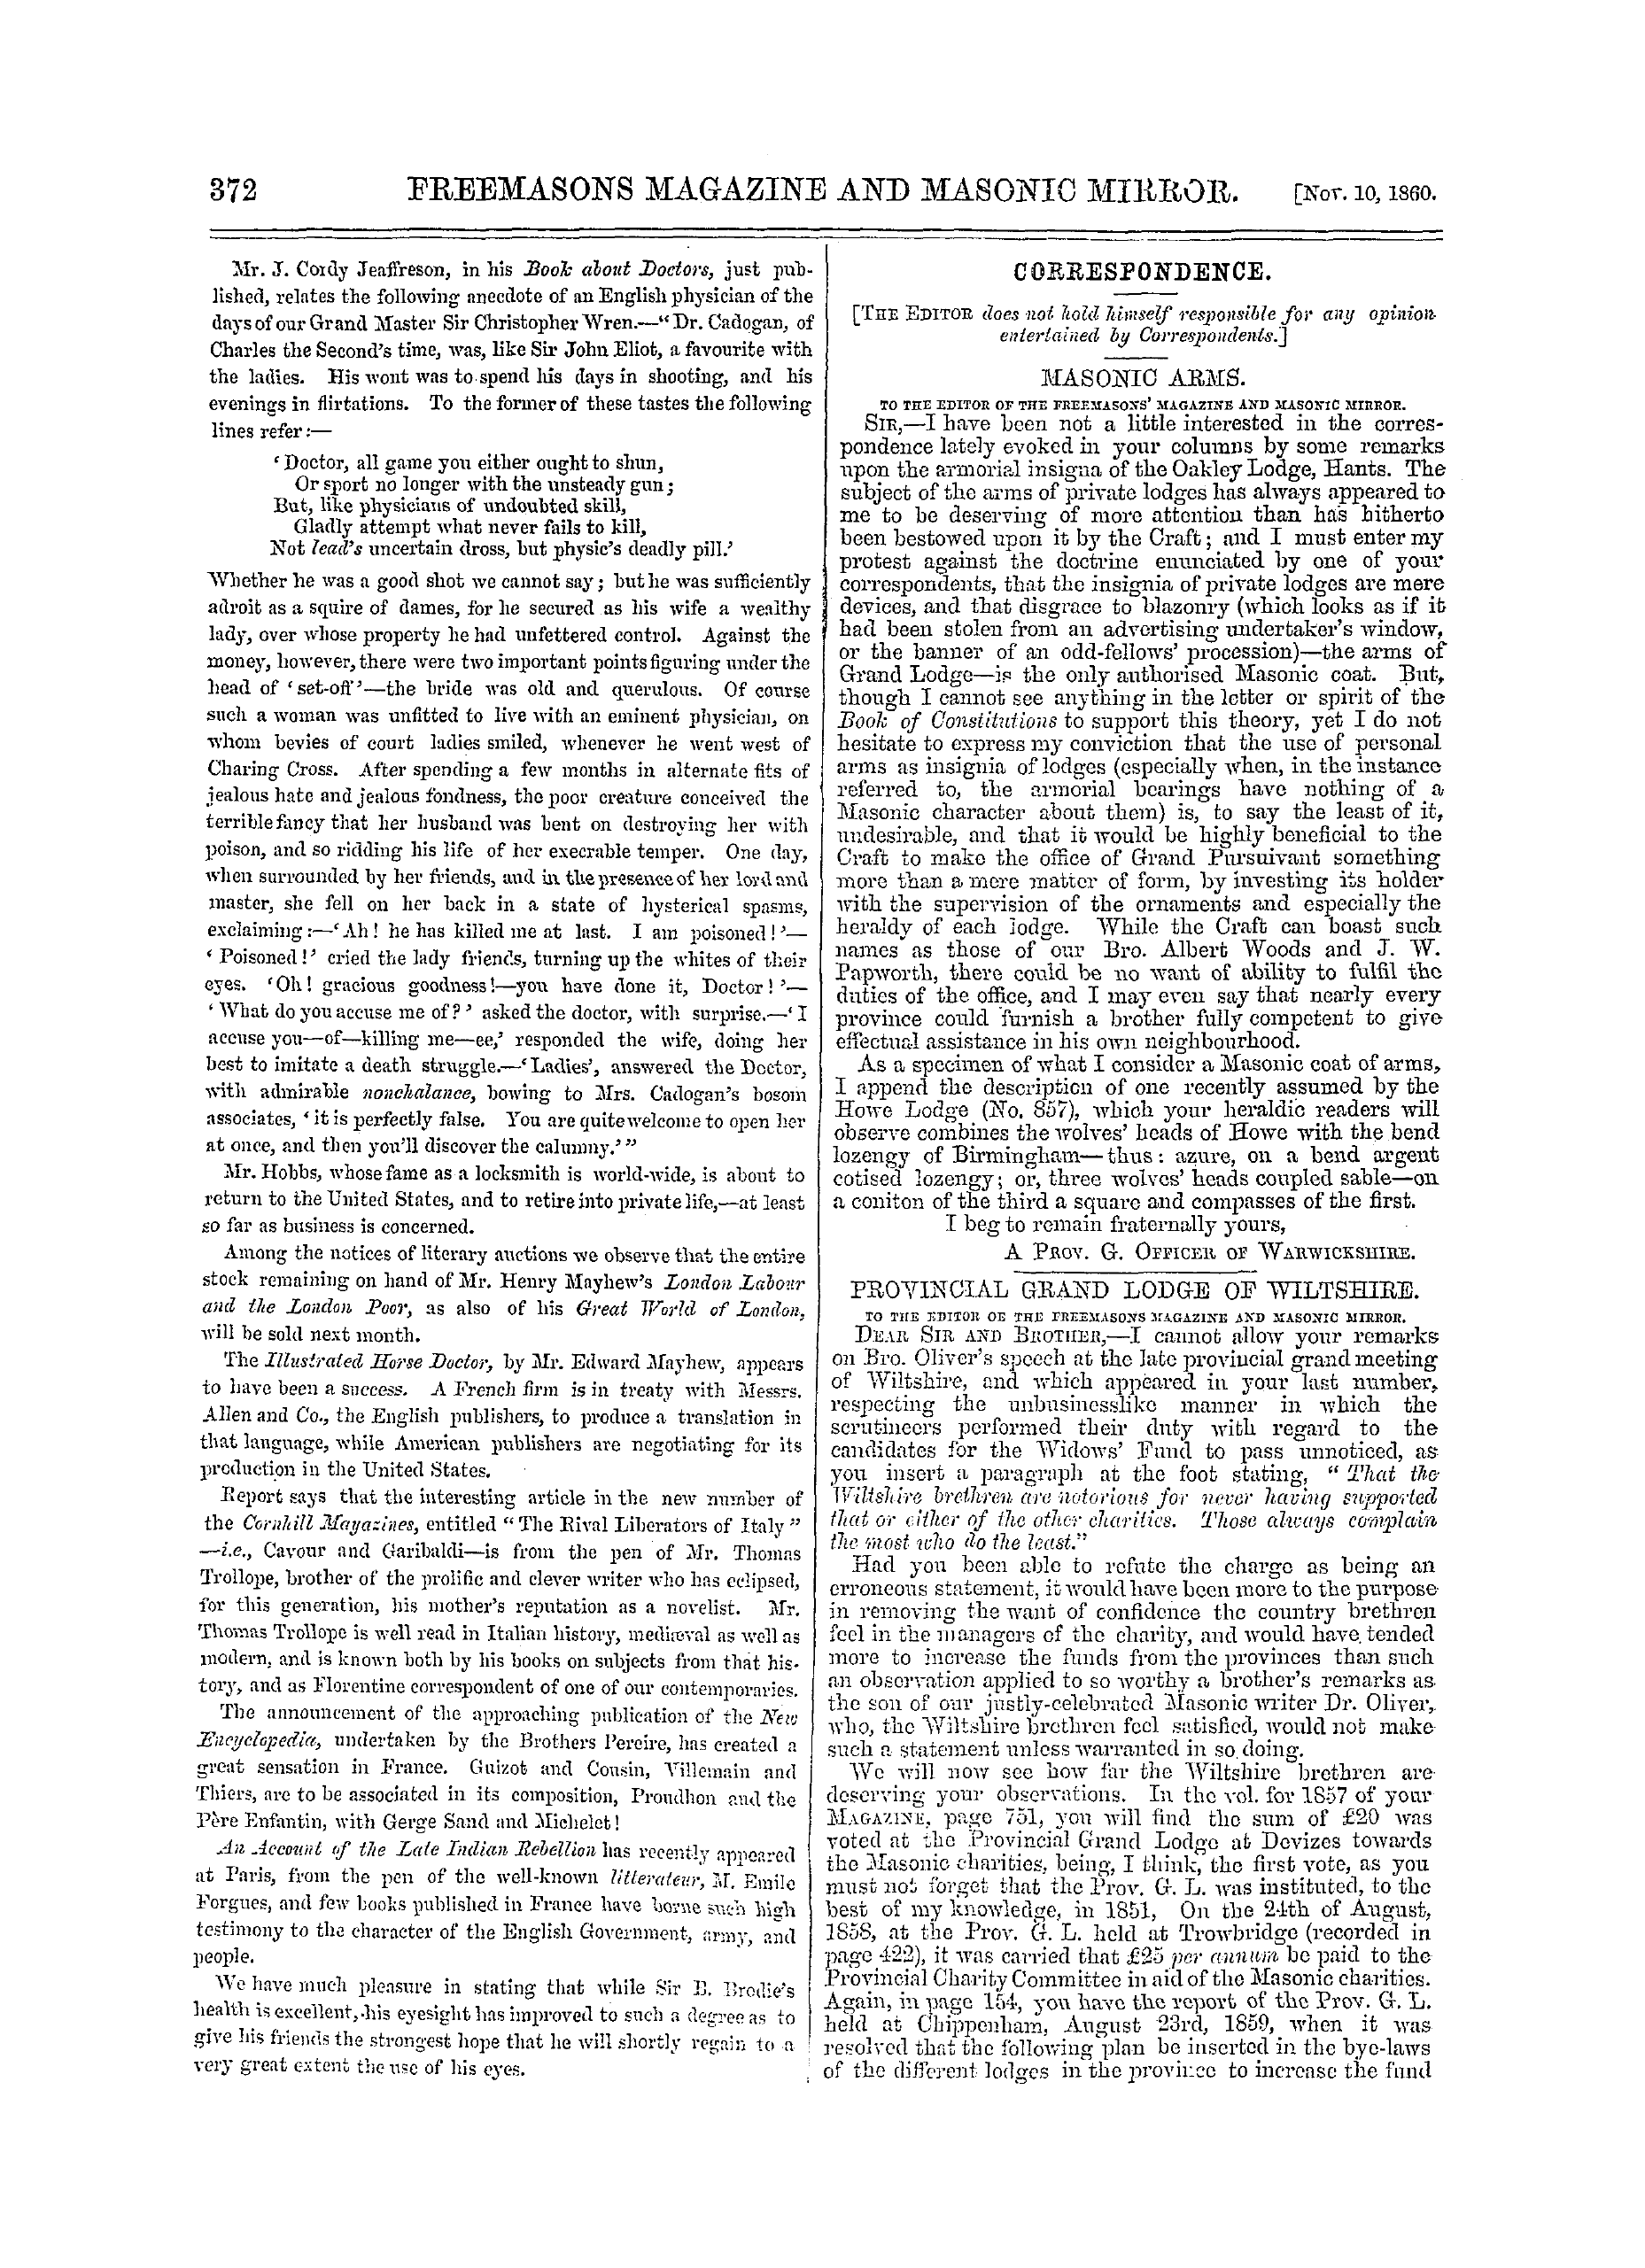 The Freemasons' Monthly Magazine: 1860-11-10 - Correspondence.